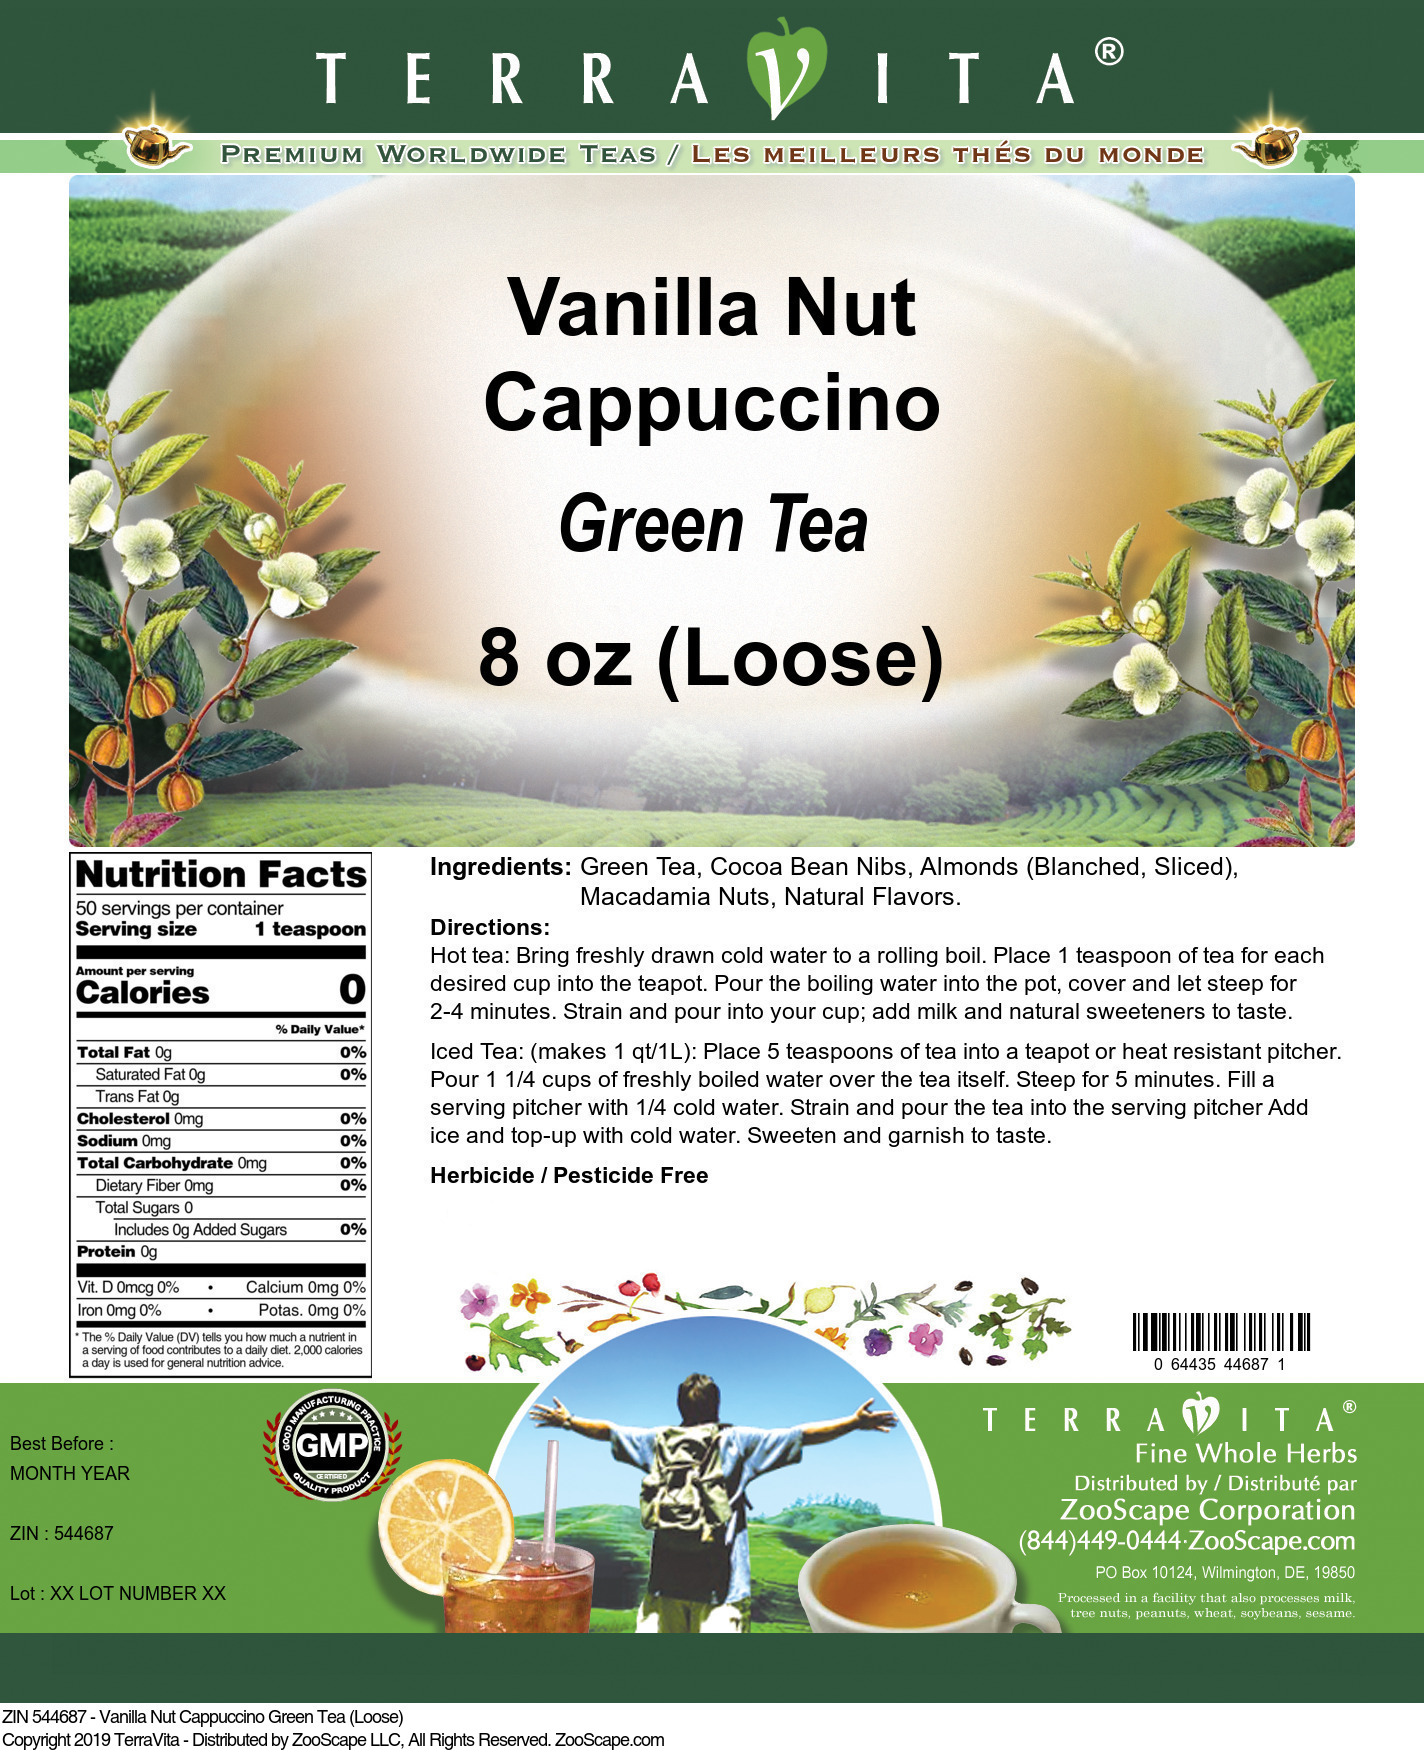 Vanilla Nut Cappuccino Green Tea (Loose) - Label